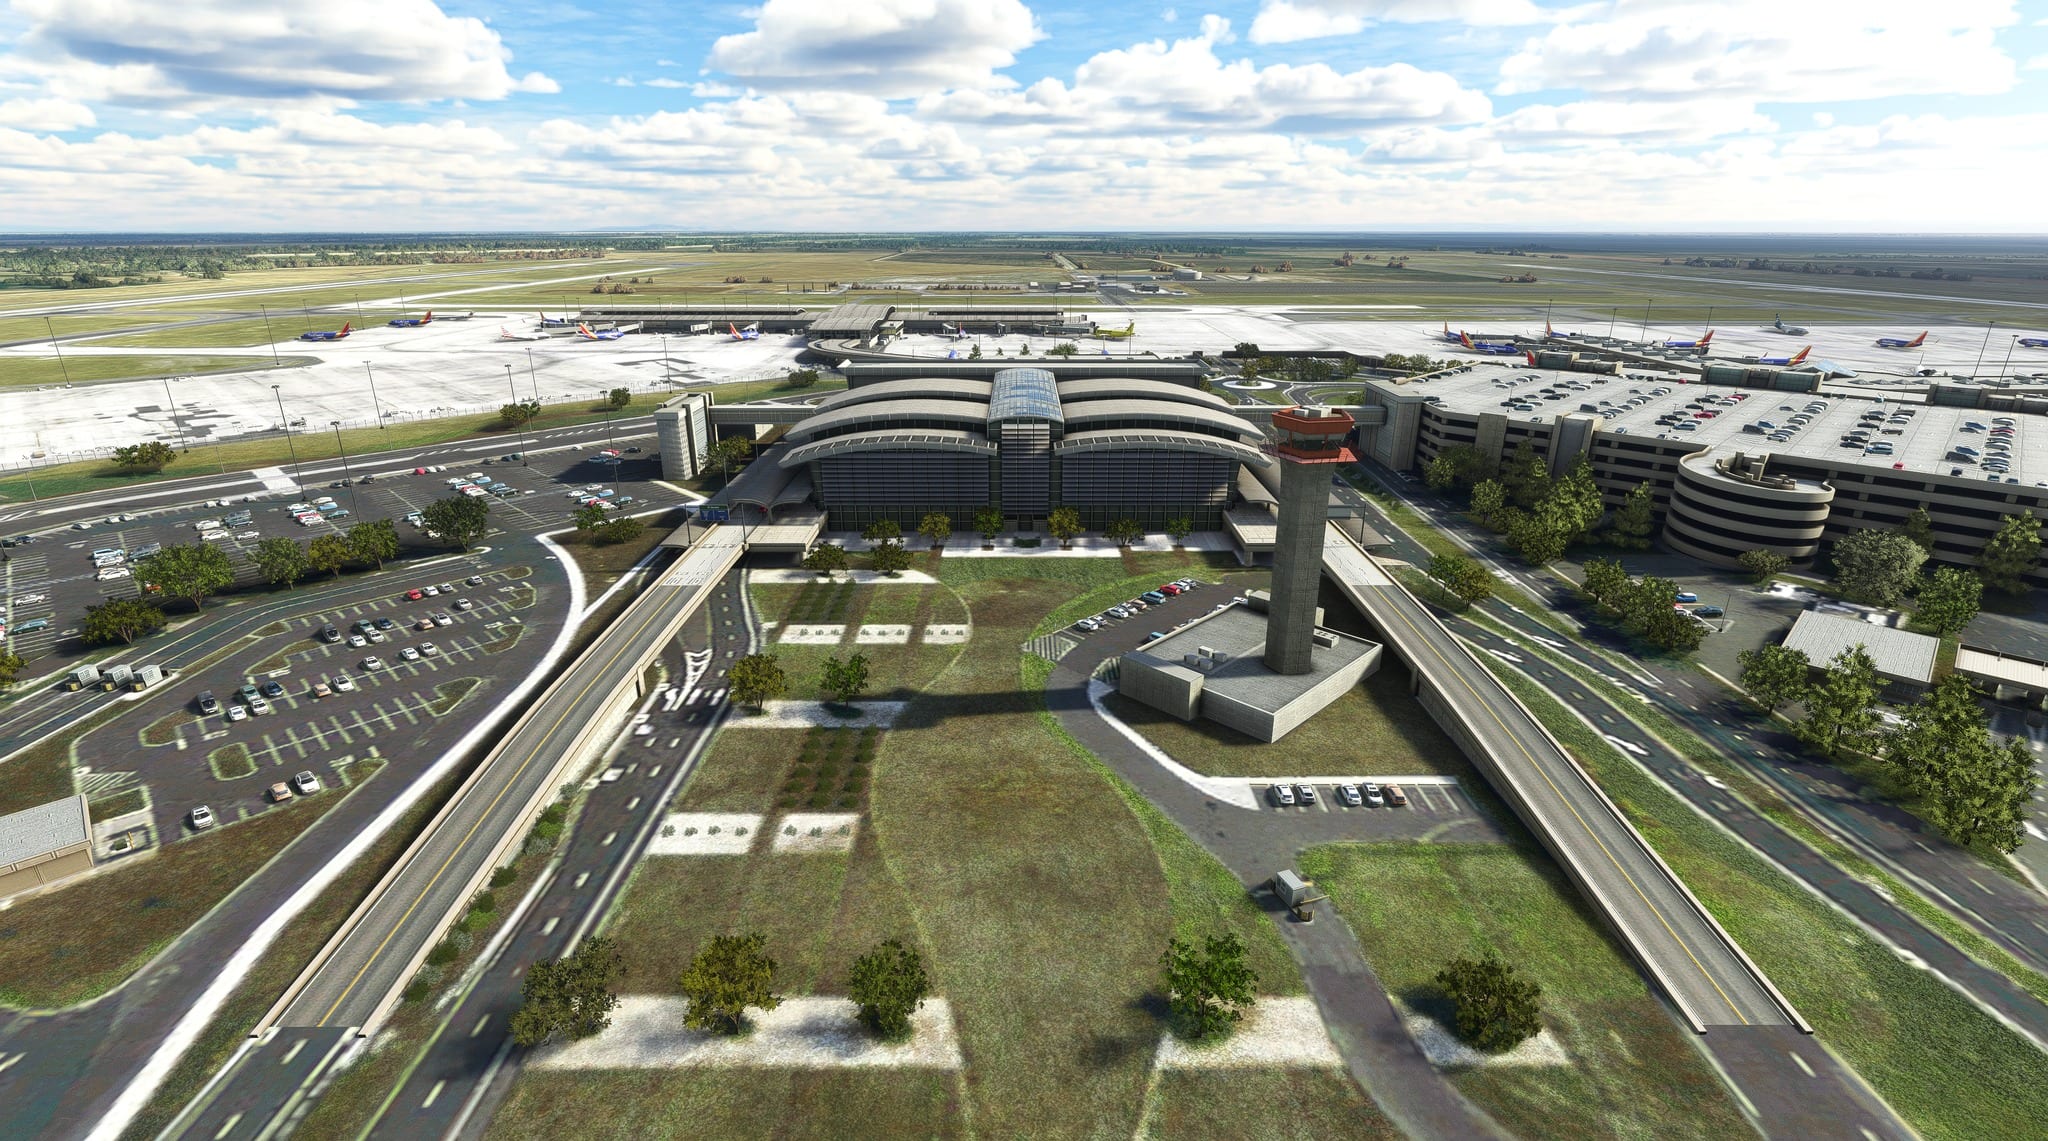 Orbx Releases New Sacramento Airport Scenery for MSFS - Microsoft Flight Simulator, Orbx